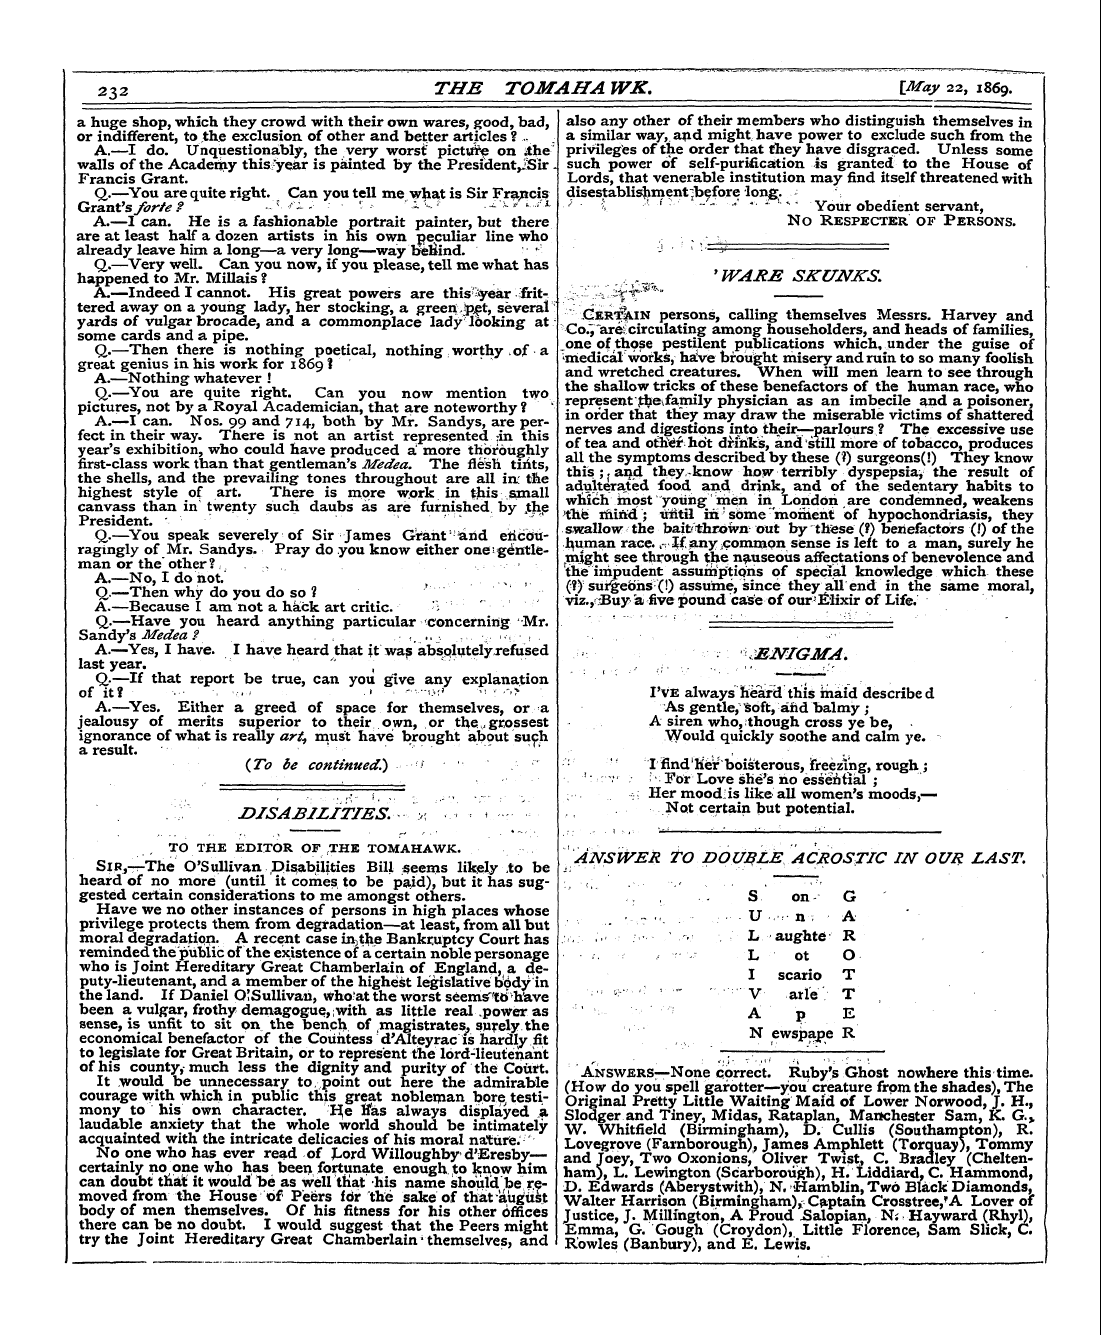 Tomahawk (1867-1870): jS F Y, 1st edition - Jdjsabllities. Y